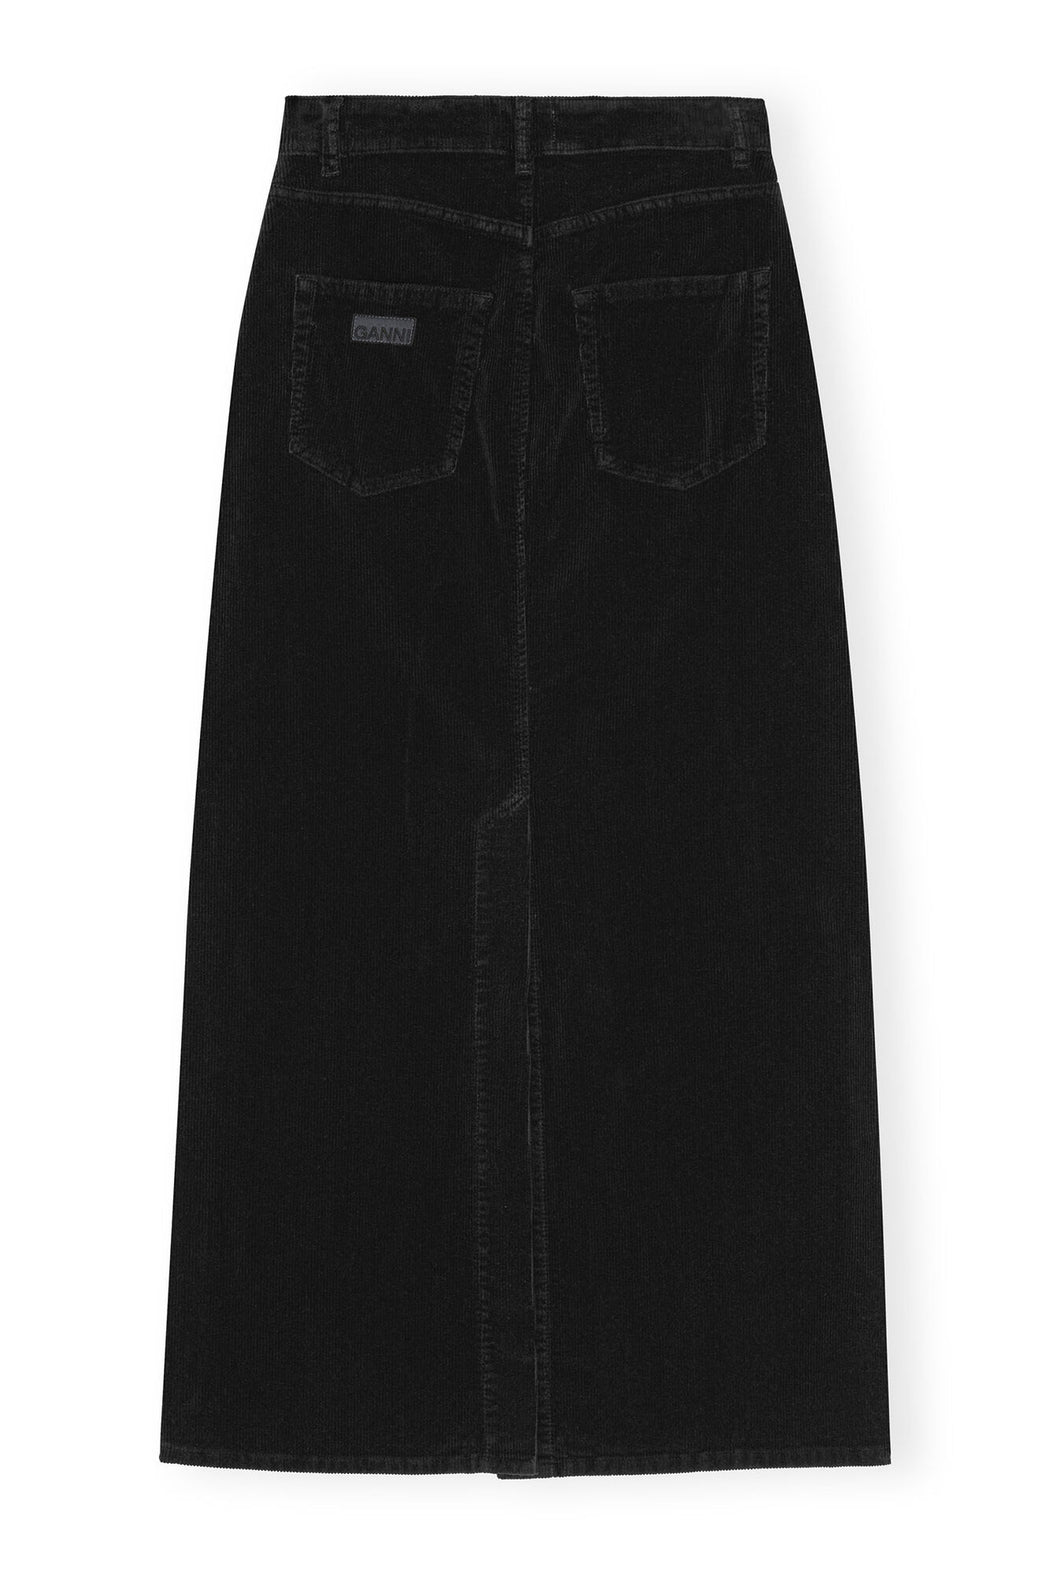 Ganni - Washed Corduroy Long Skirt in Black